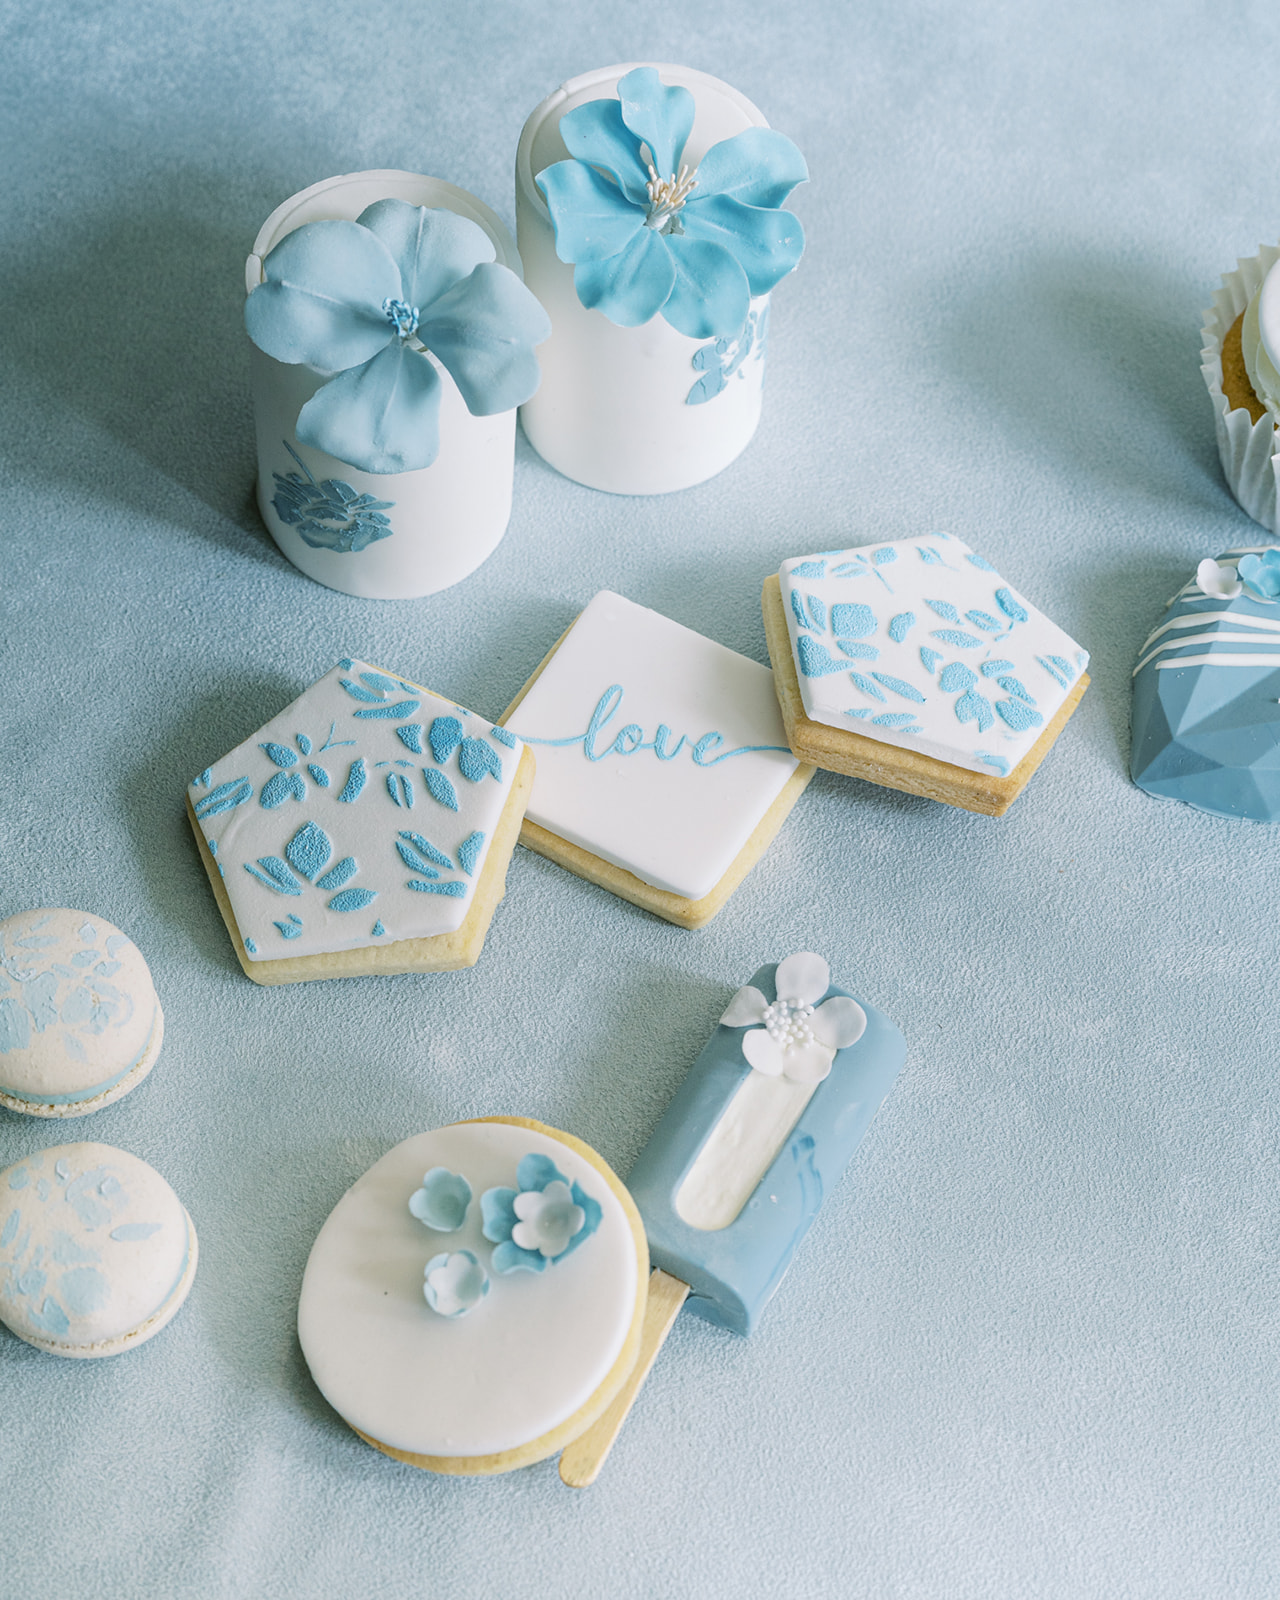 Somerley House luxury wedding venue | Luxury wedding cake and dessert table | Louise Hayes Cake Design